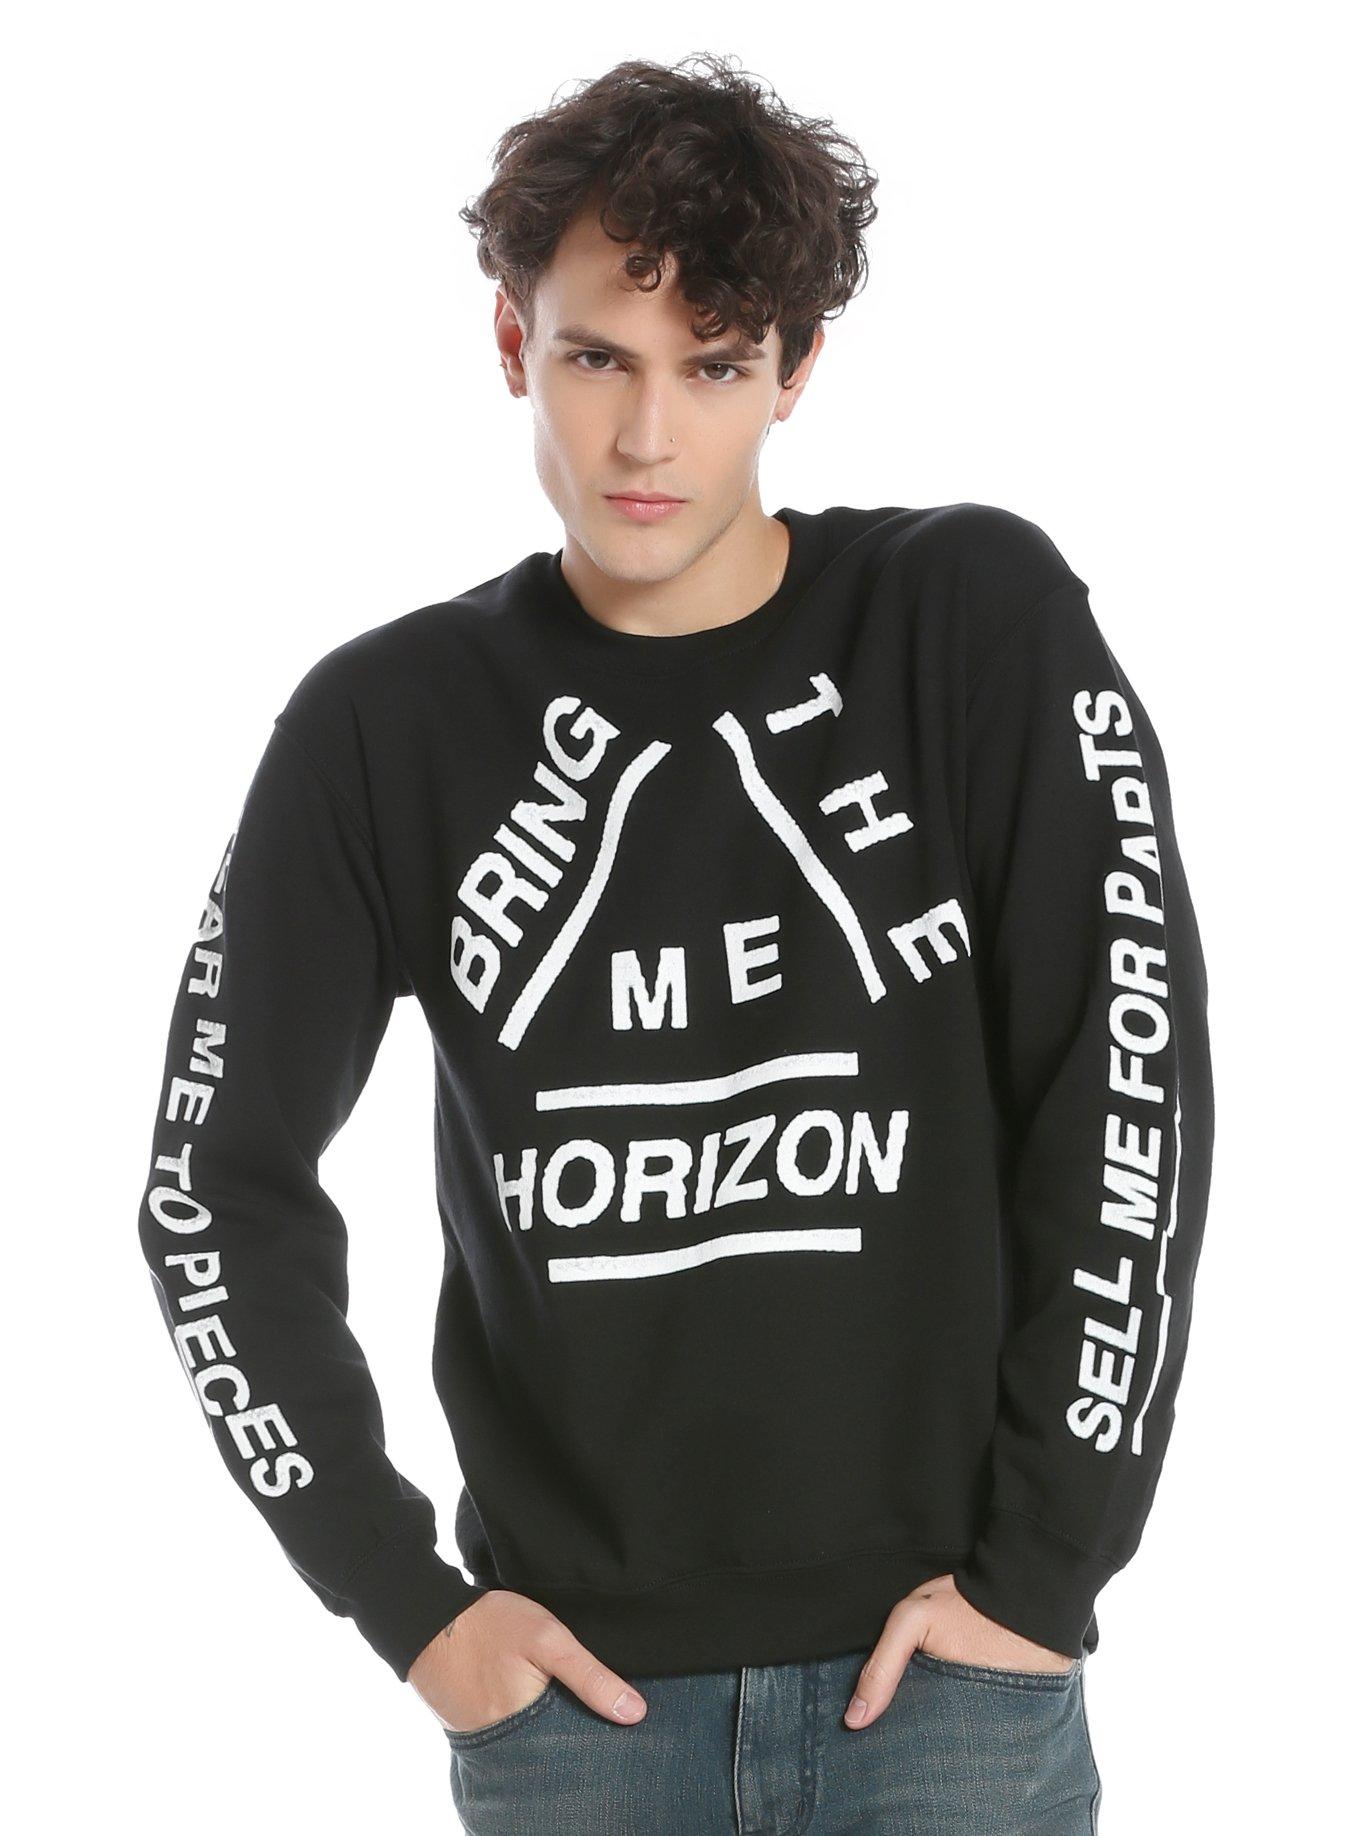 Bring Me The Horizon Doomed Sweatshirt, BLACK, hi-res